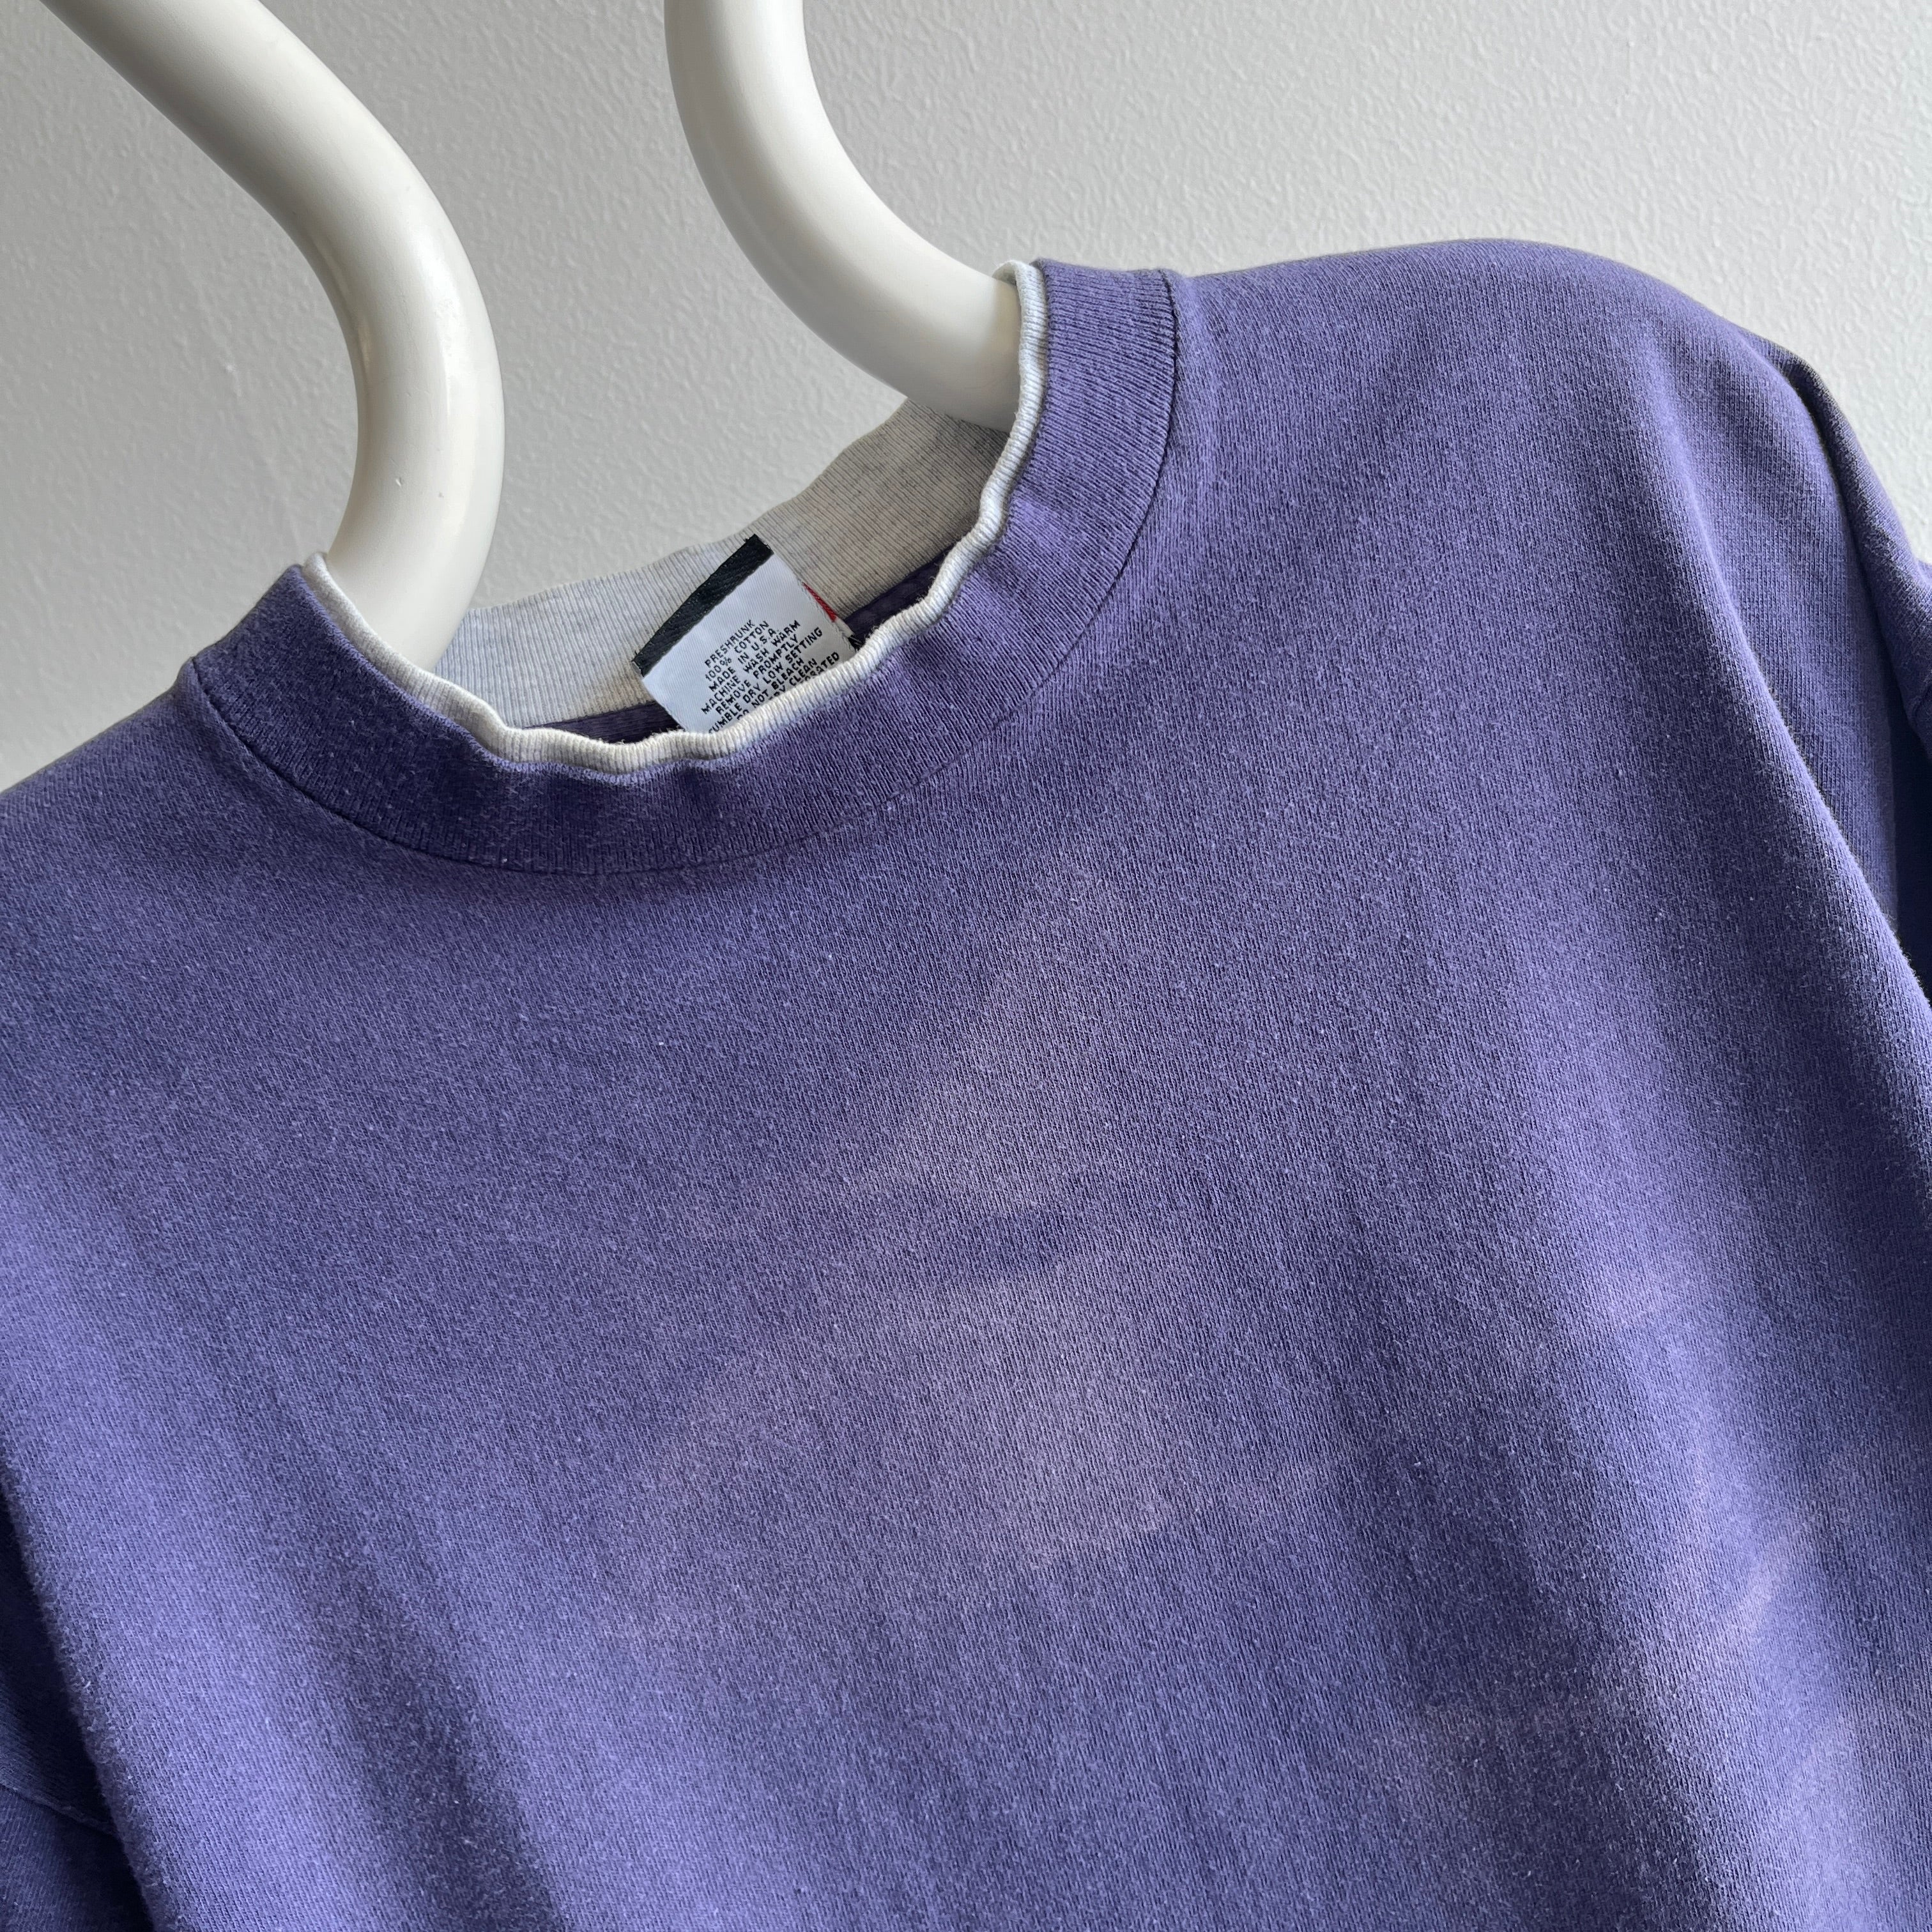 1980s Rad Sun Faded Swirls Blank Navy Rolled Back Sleeve Cotton T-Shirt